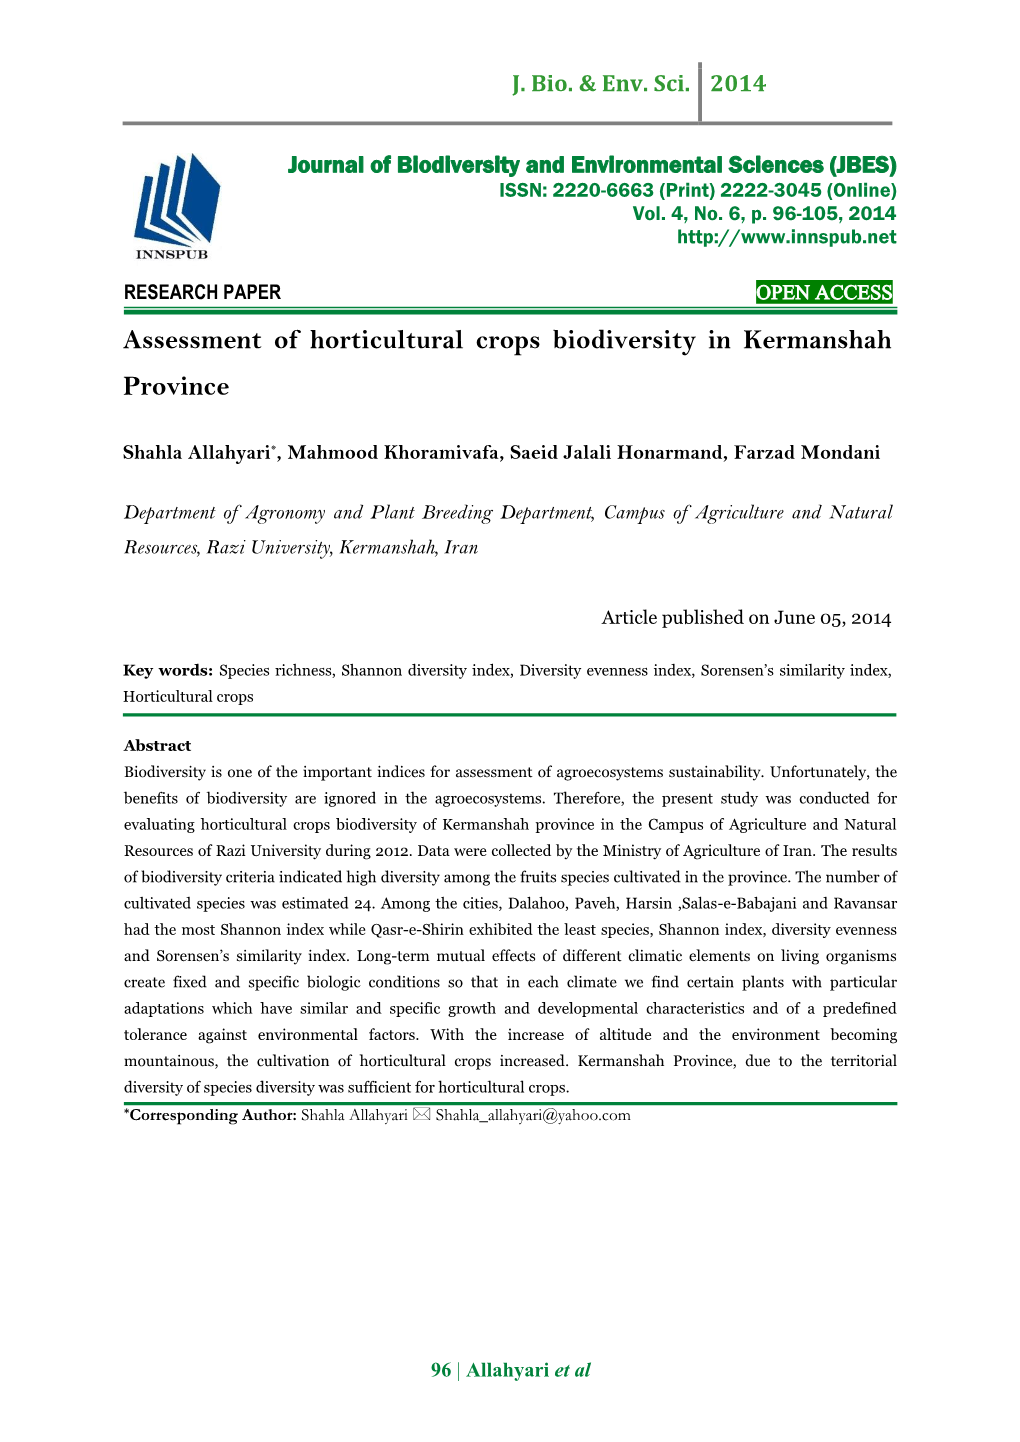 Assessment of Horticultural Crops Biodiversity in Kermanshah Province